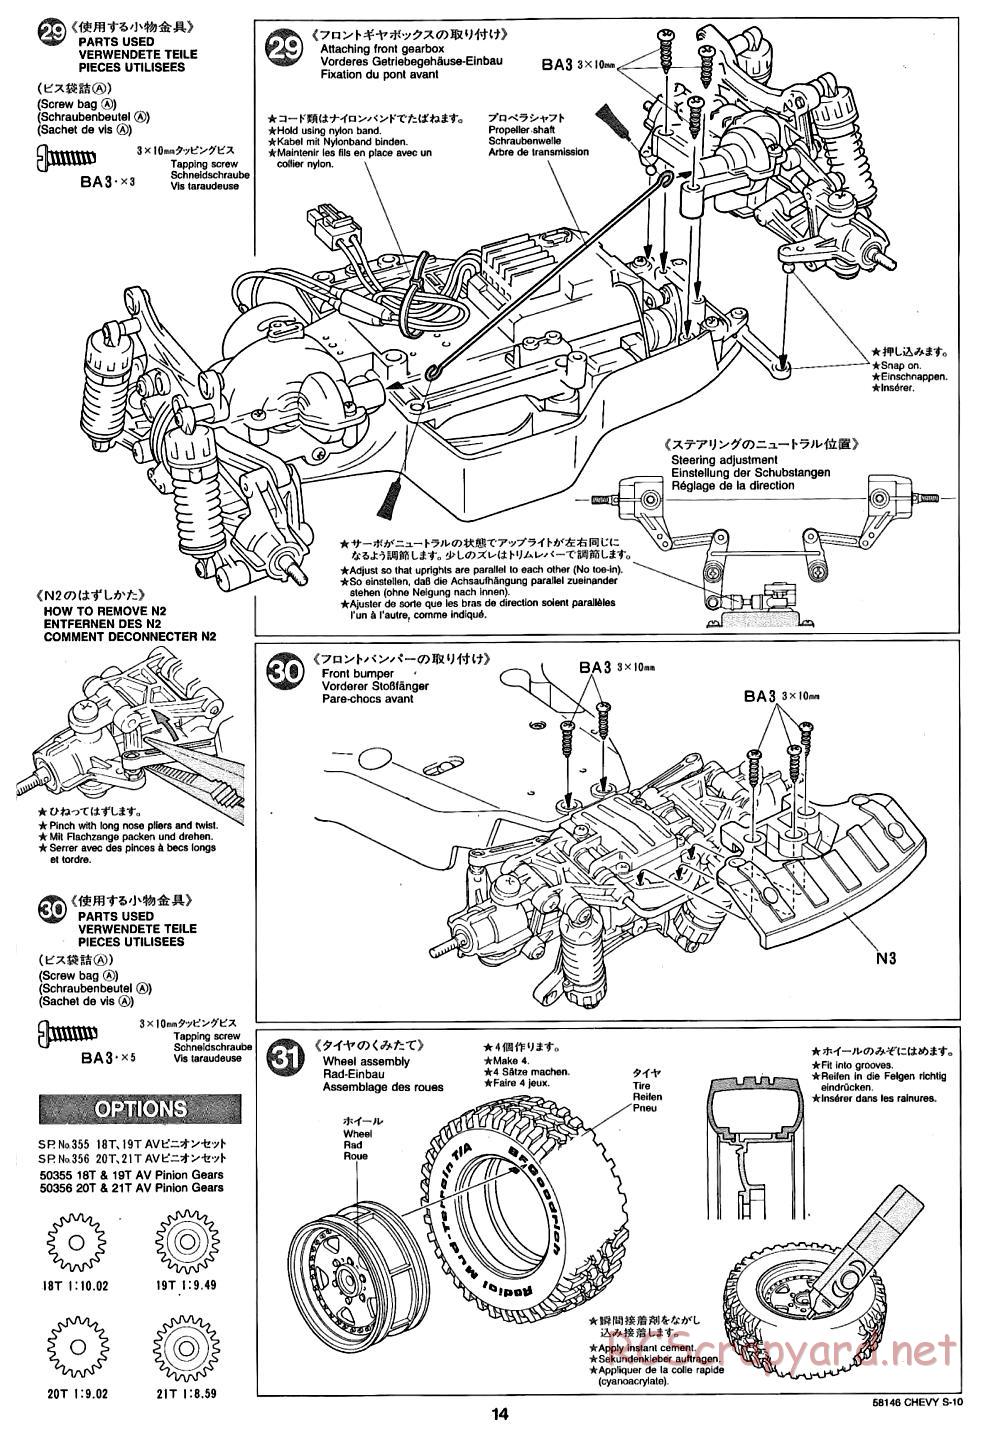 Tamiya - Chevy S-10 Chassis - Manual - Page 14